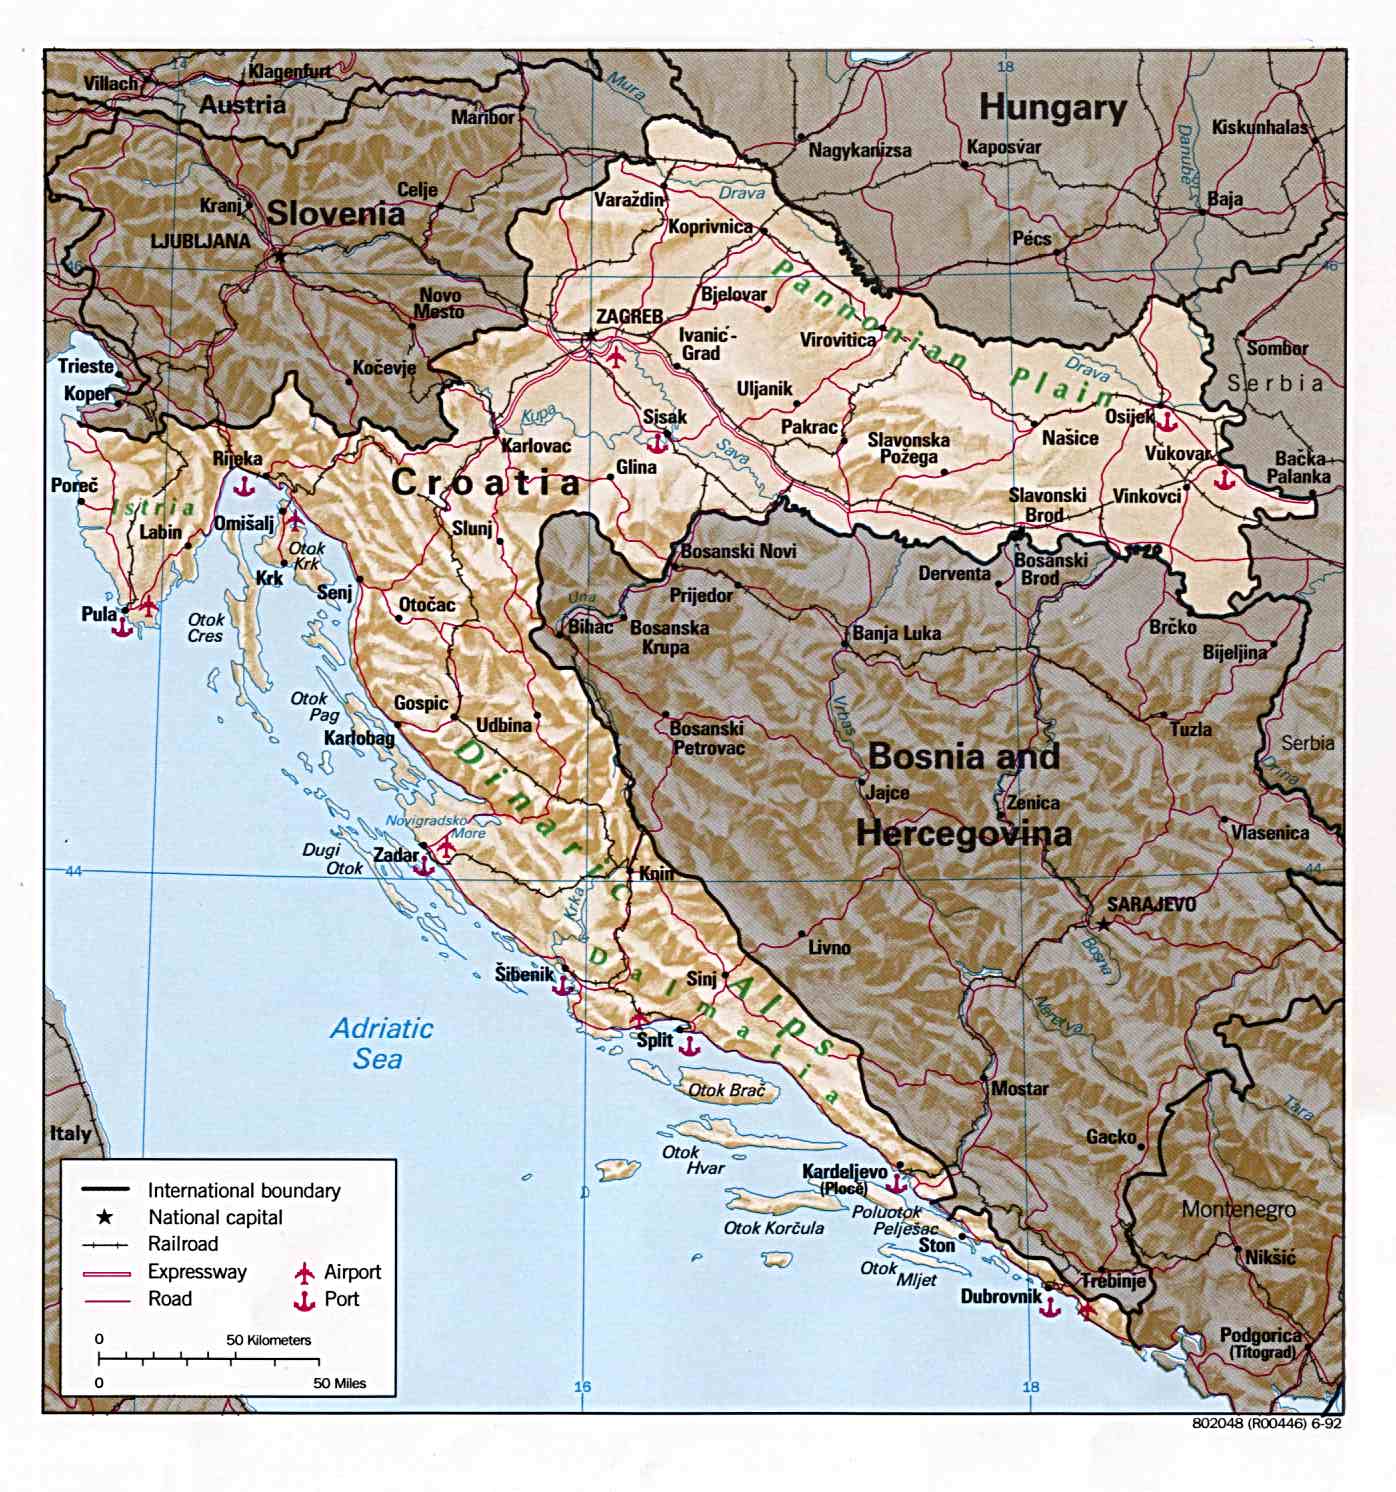 Croatia 1992